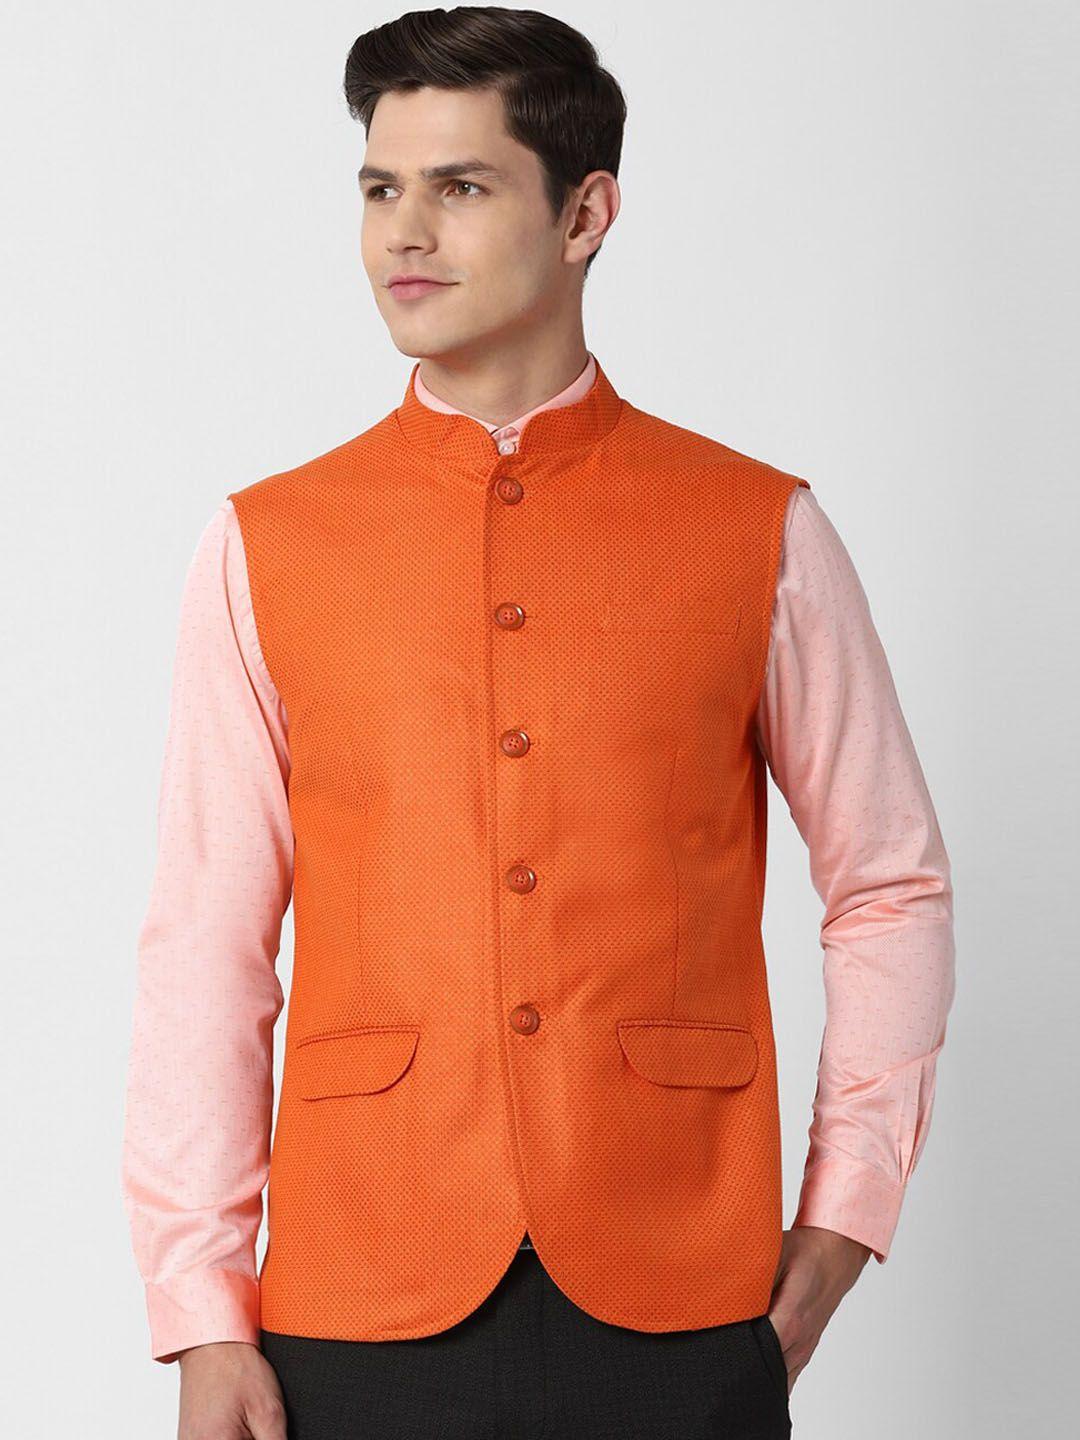 peter england elite men orange woven design nehru jacket